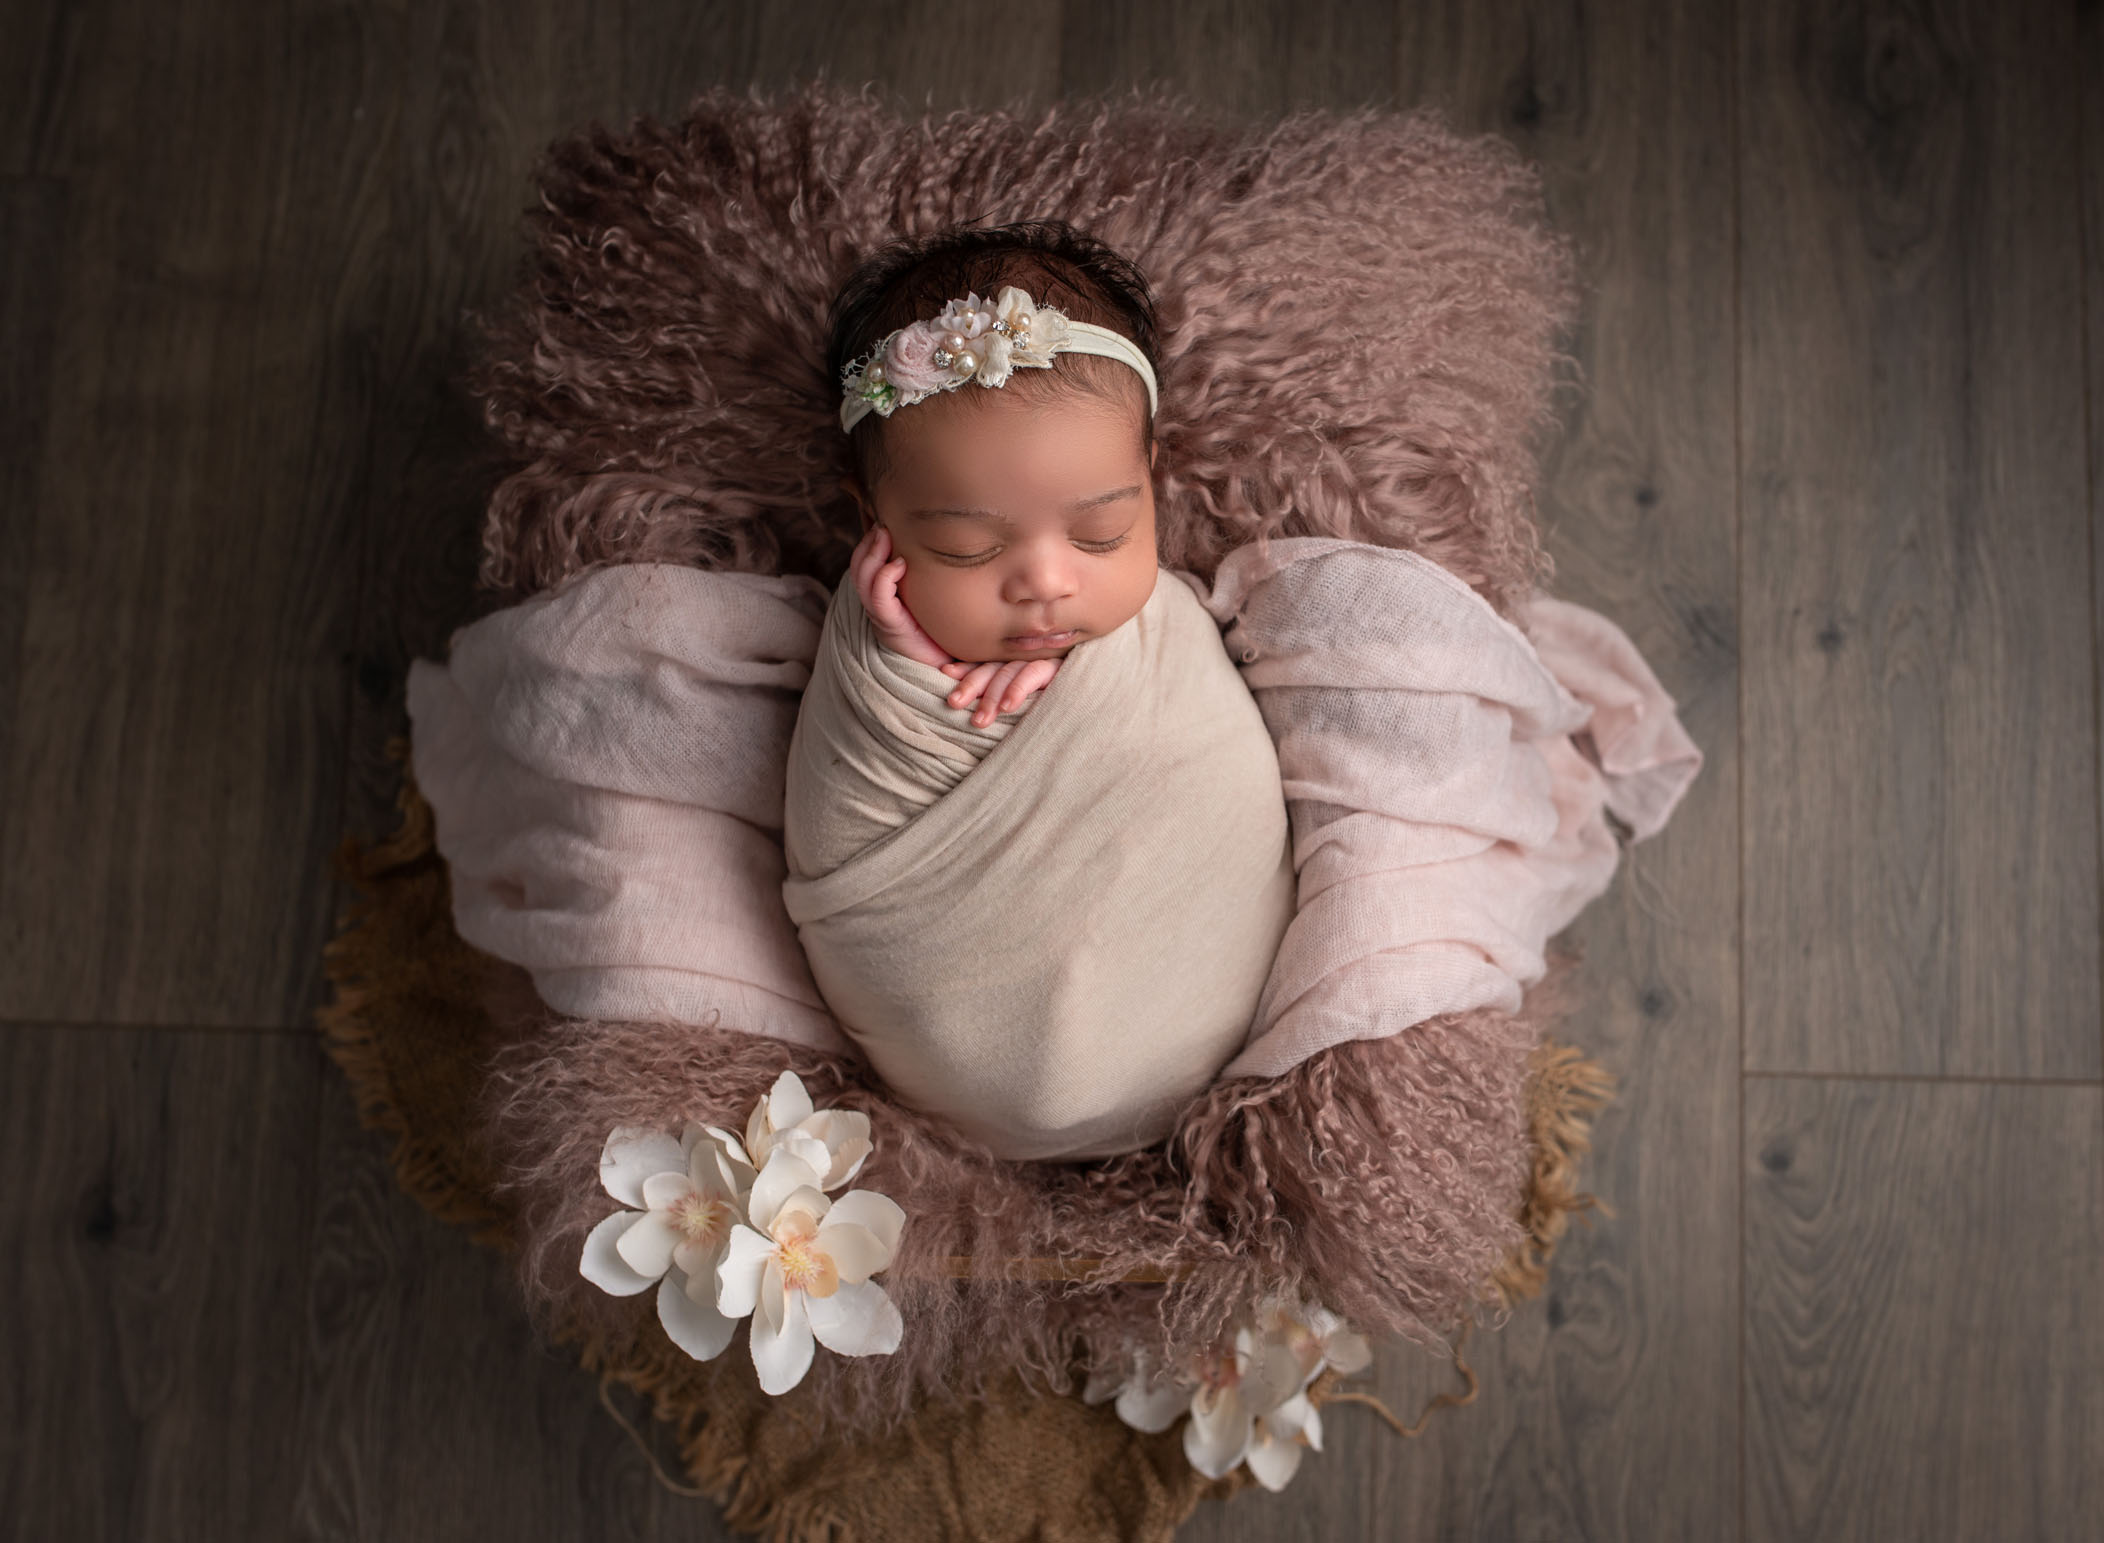 swaddled newborn girl asleep on pink fur with magnolia flowers